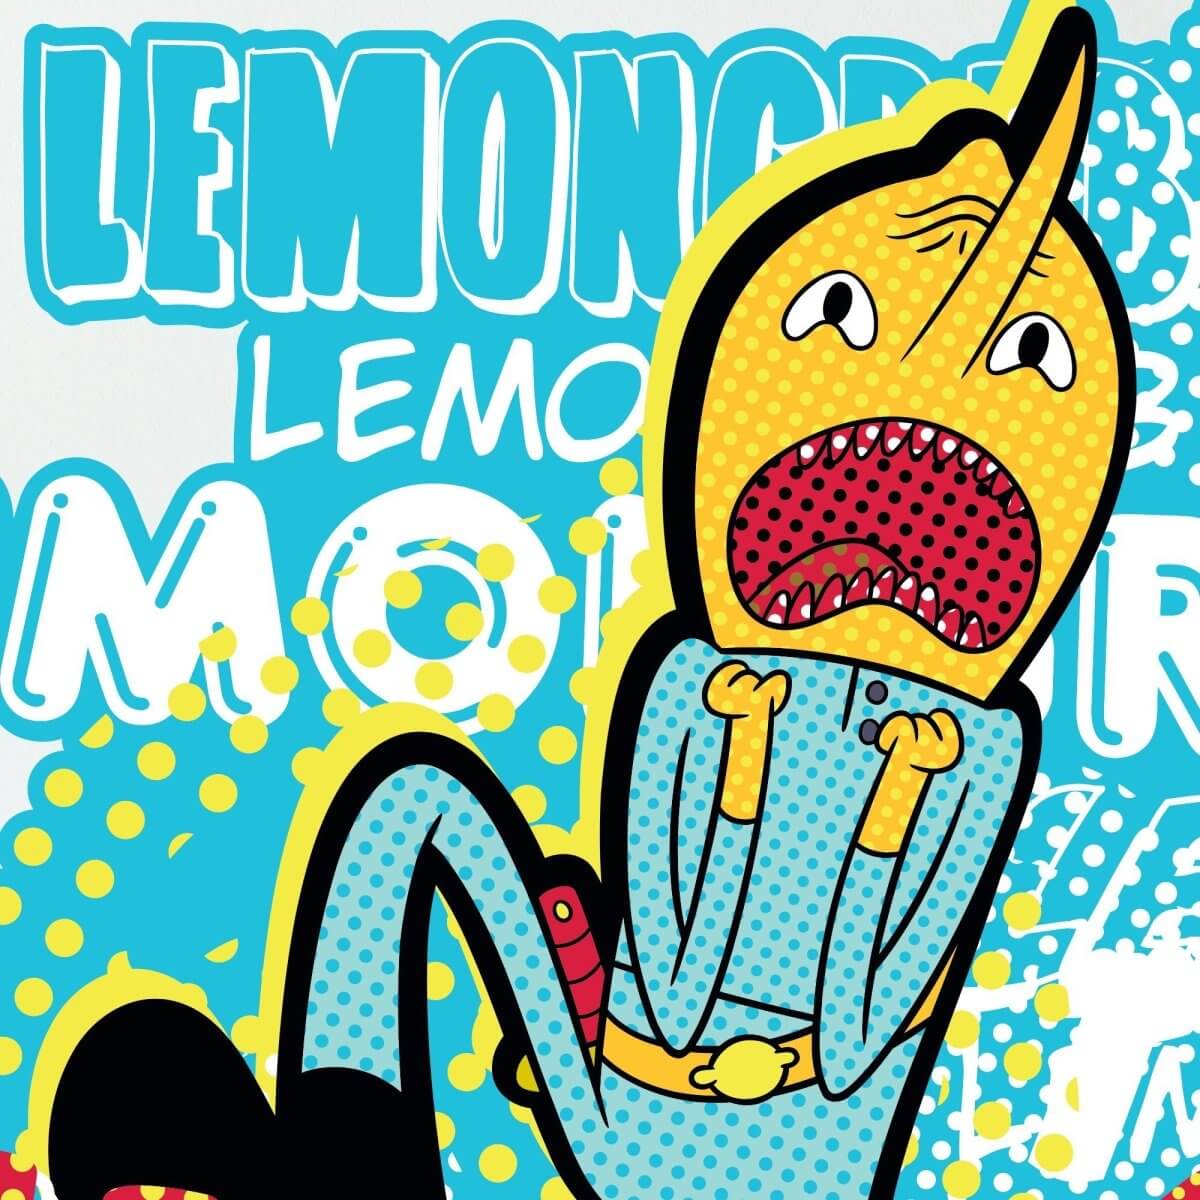 Kismet Decals Adventure Time Earl of Lemongrab Licensed Wall Sticker - Easy DIY Home & Kids Room Decor Wall Decal Art - Kismet Decals